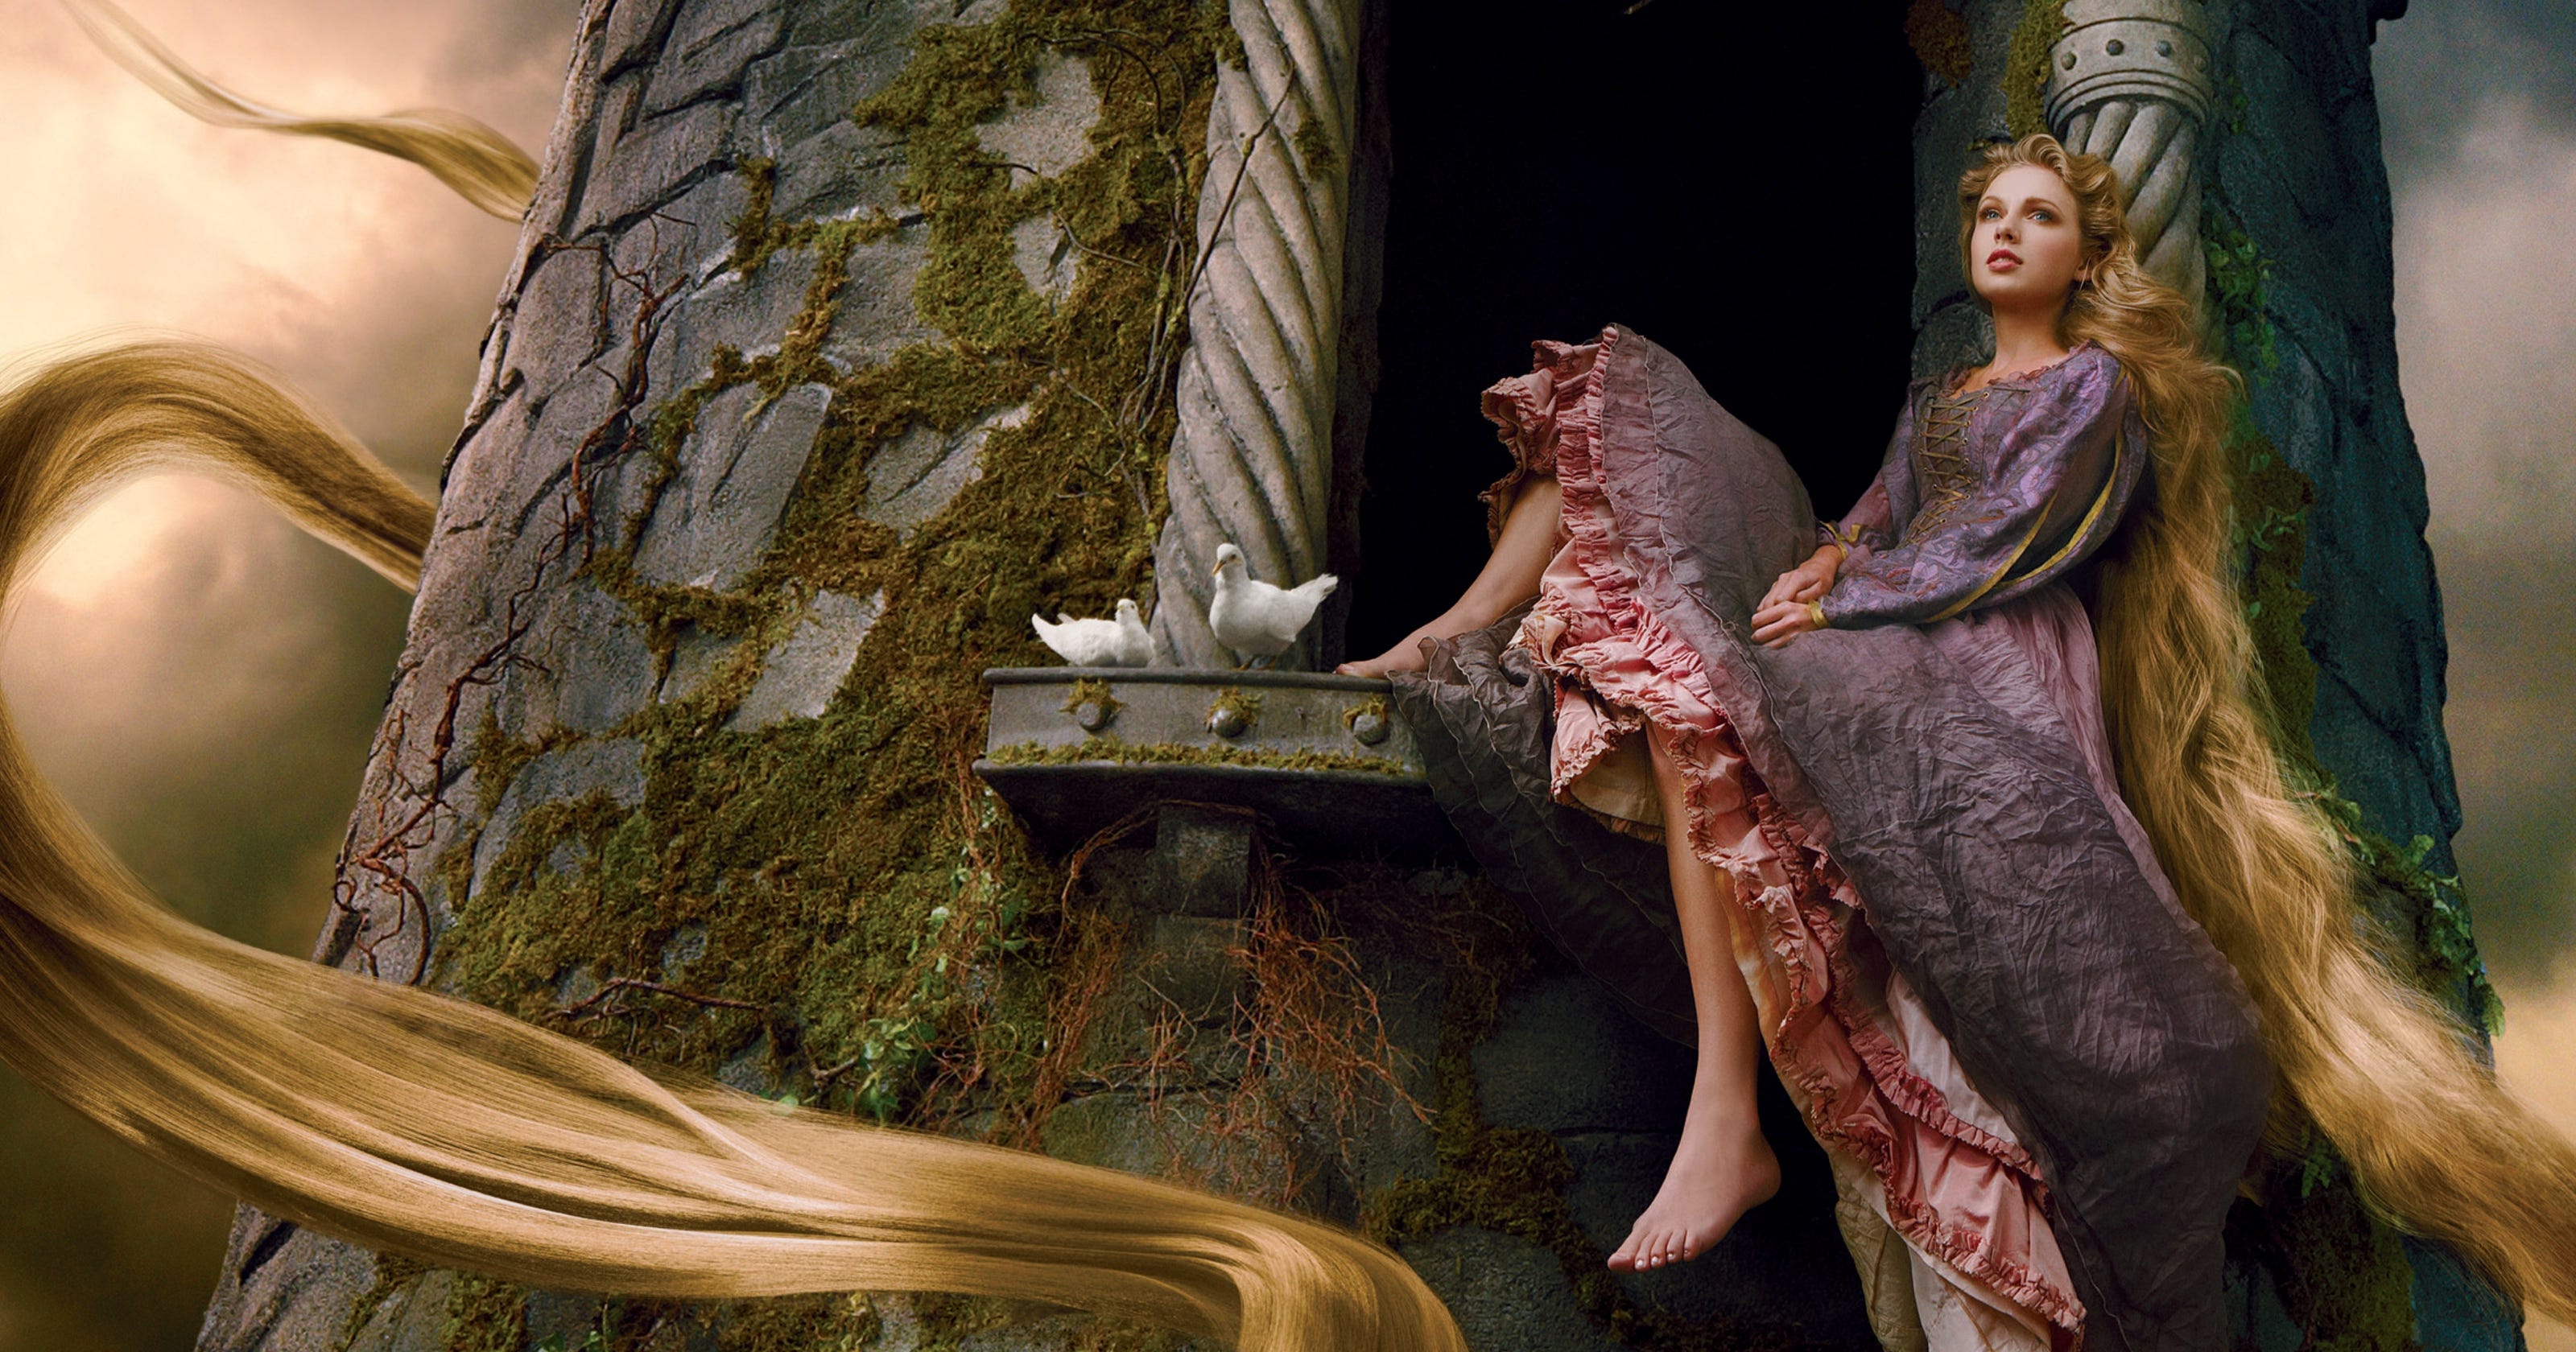 Taylor Swift transforms into Disney's Rapunzel3200 x 1680